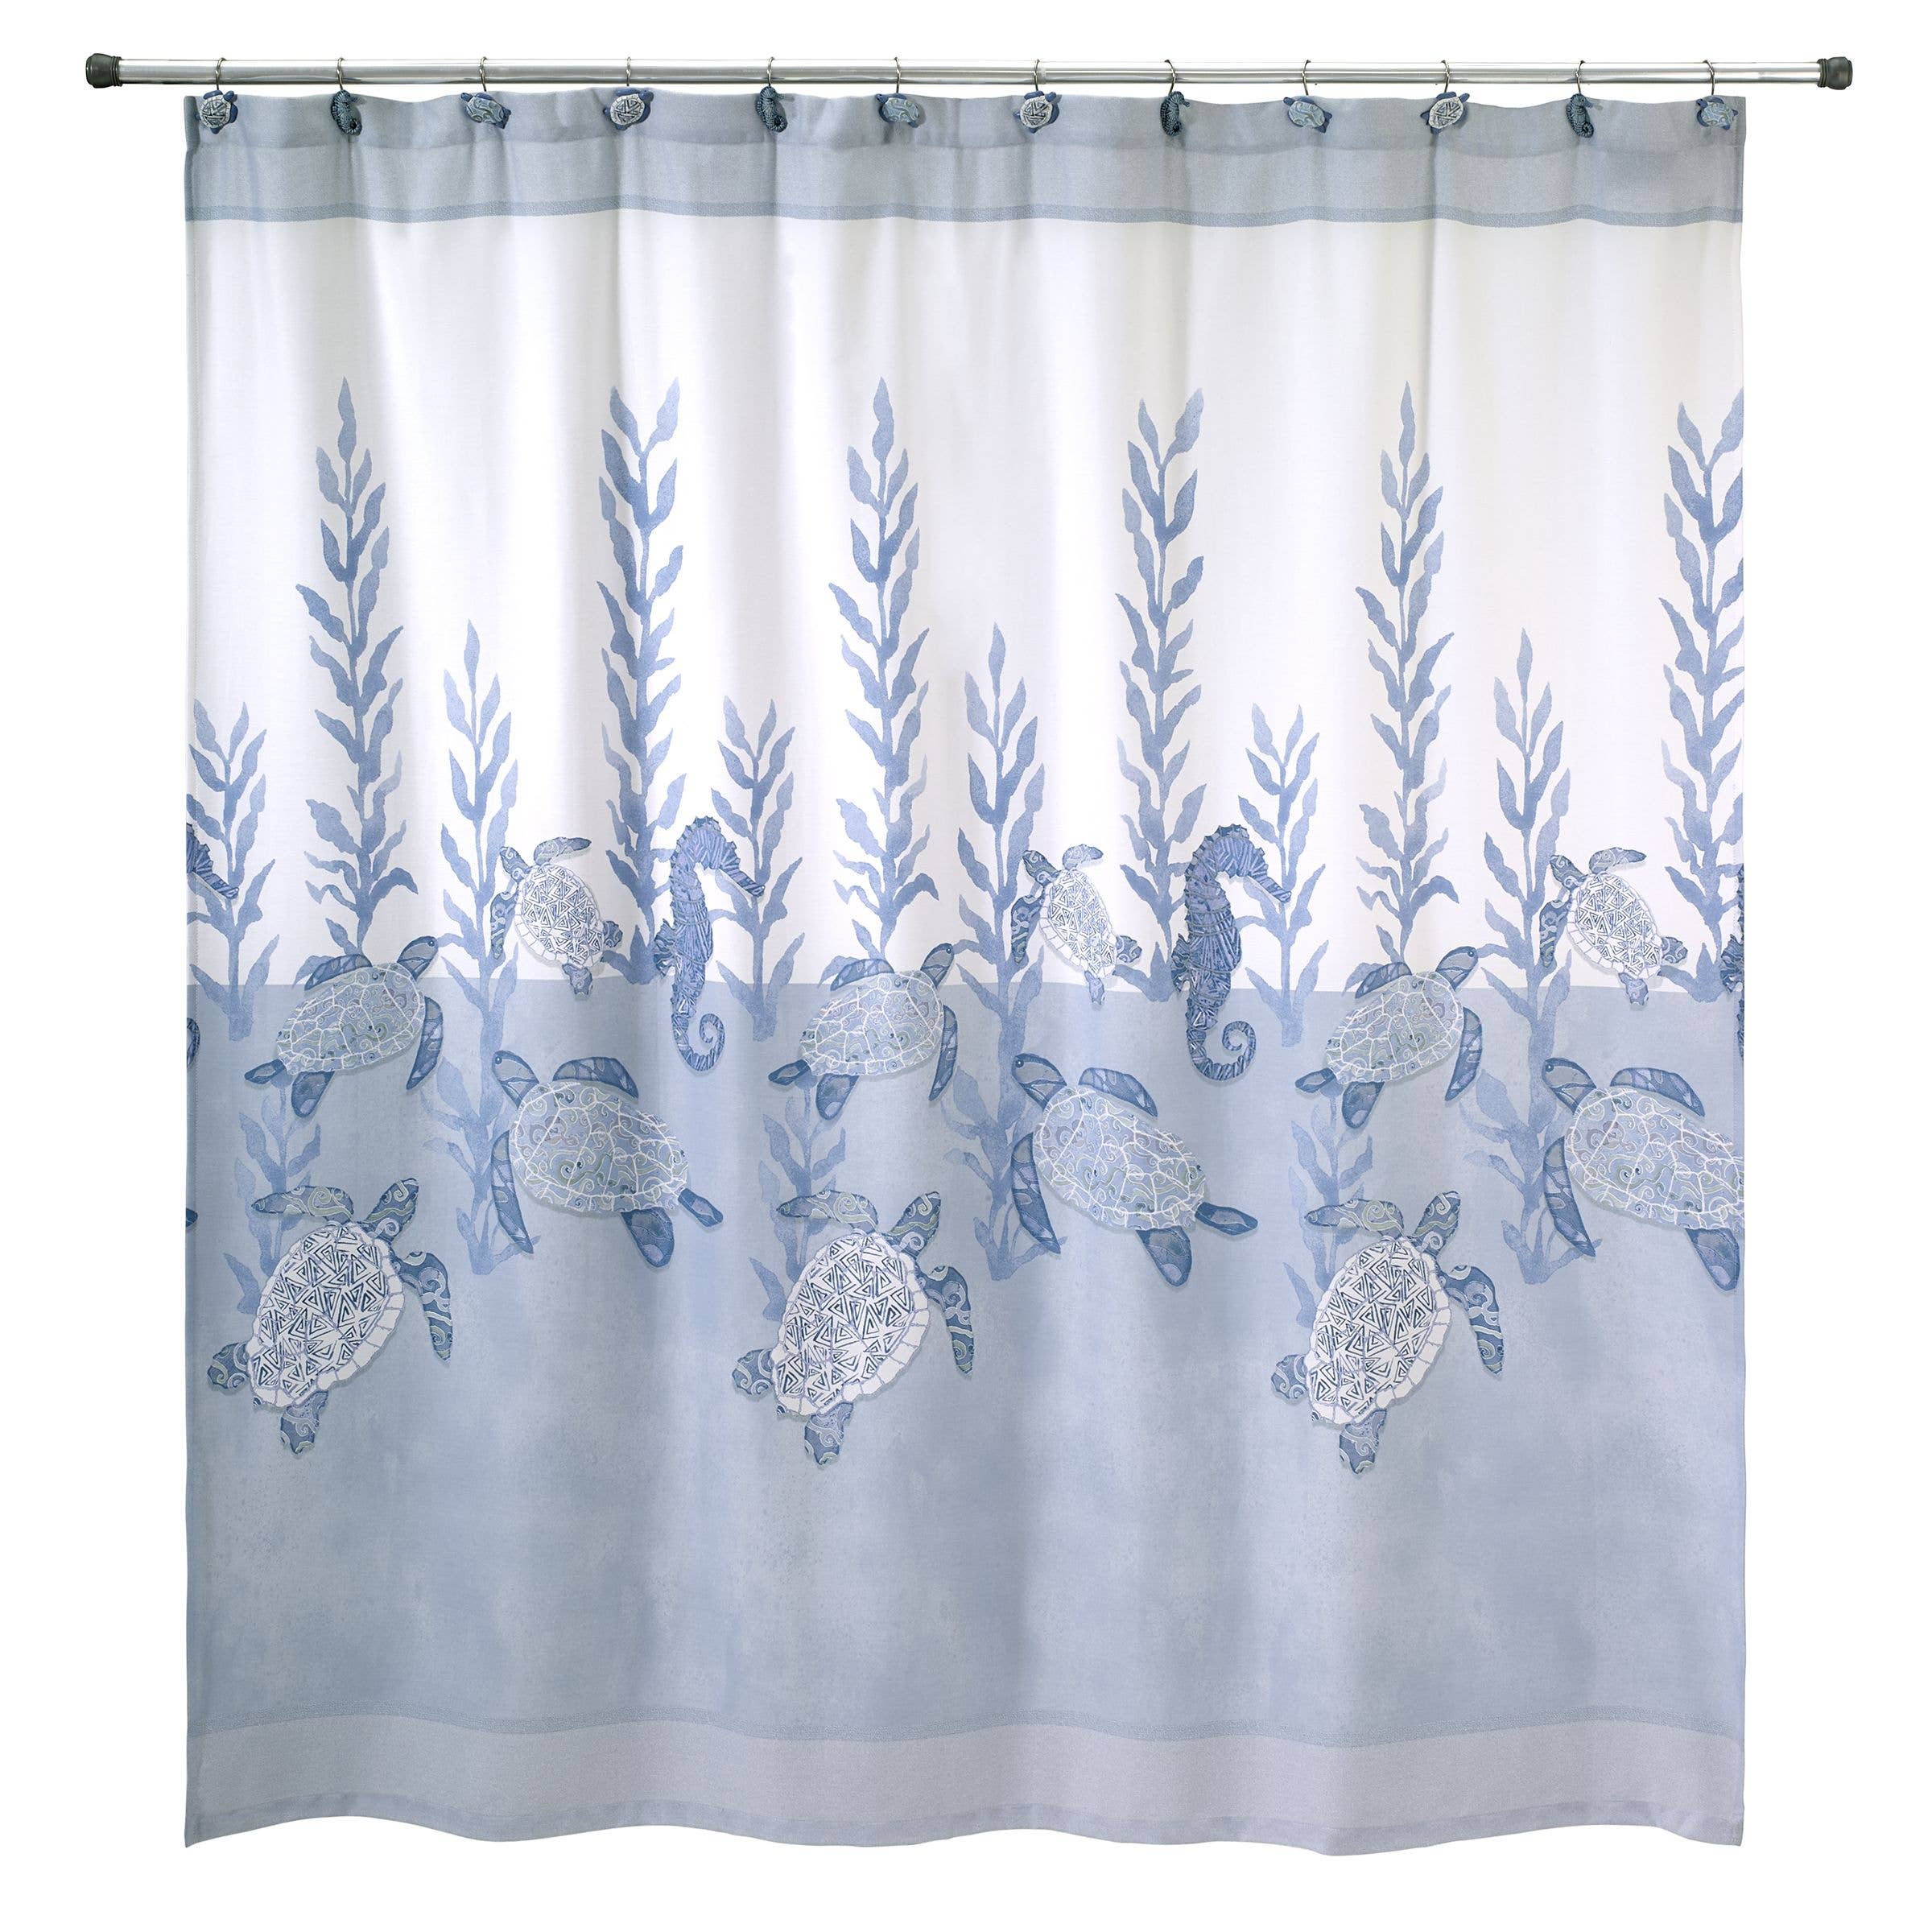 shower curtain with hooks rustproof metal| Alibaba.com